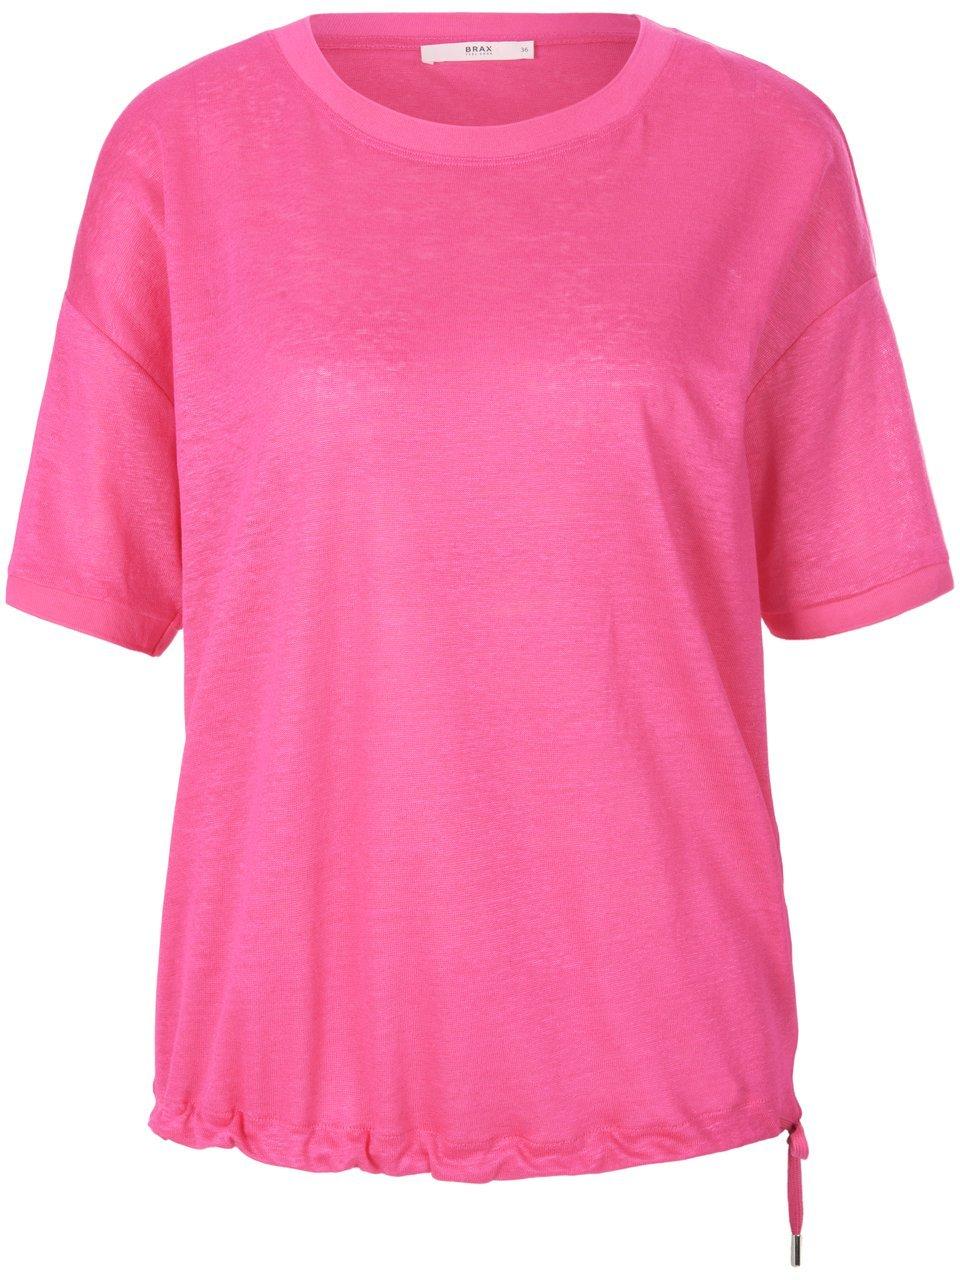 Shirt Van Brax Feel Good pink